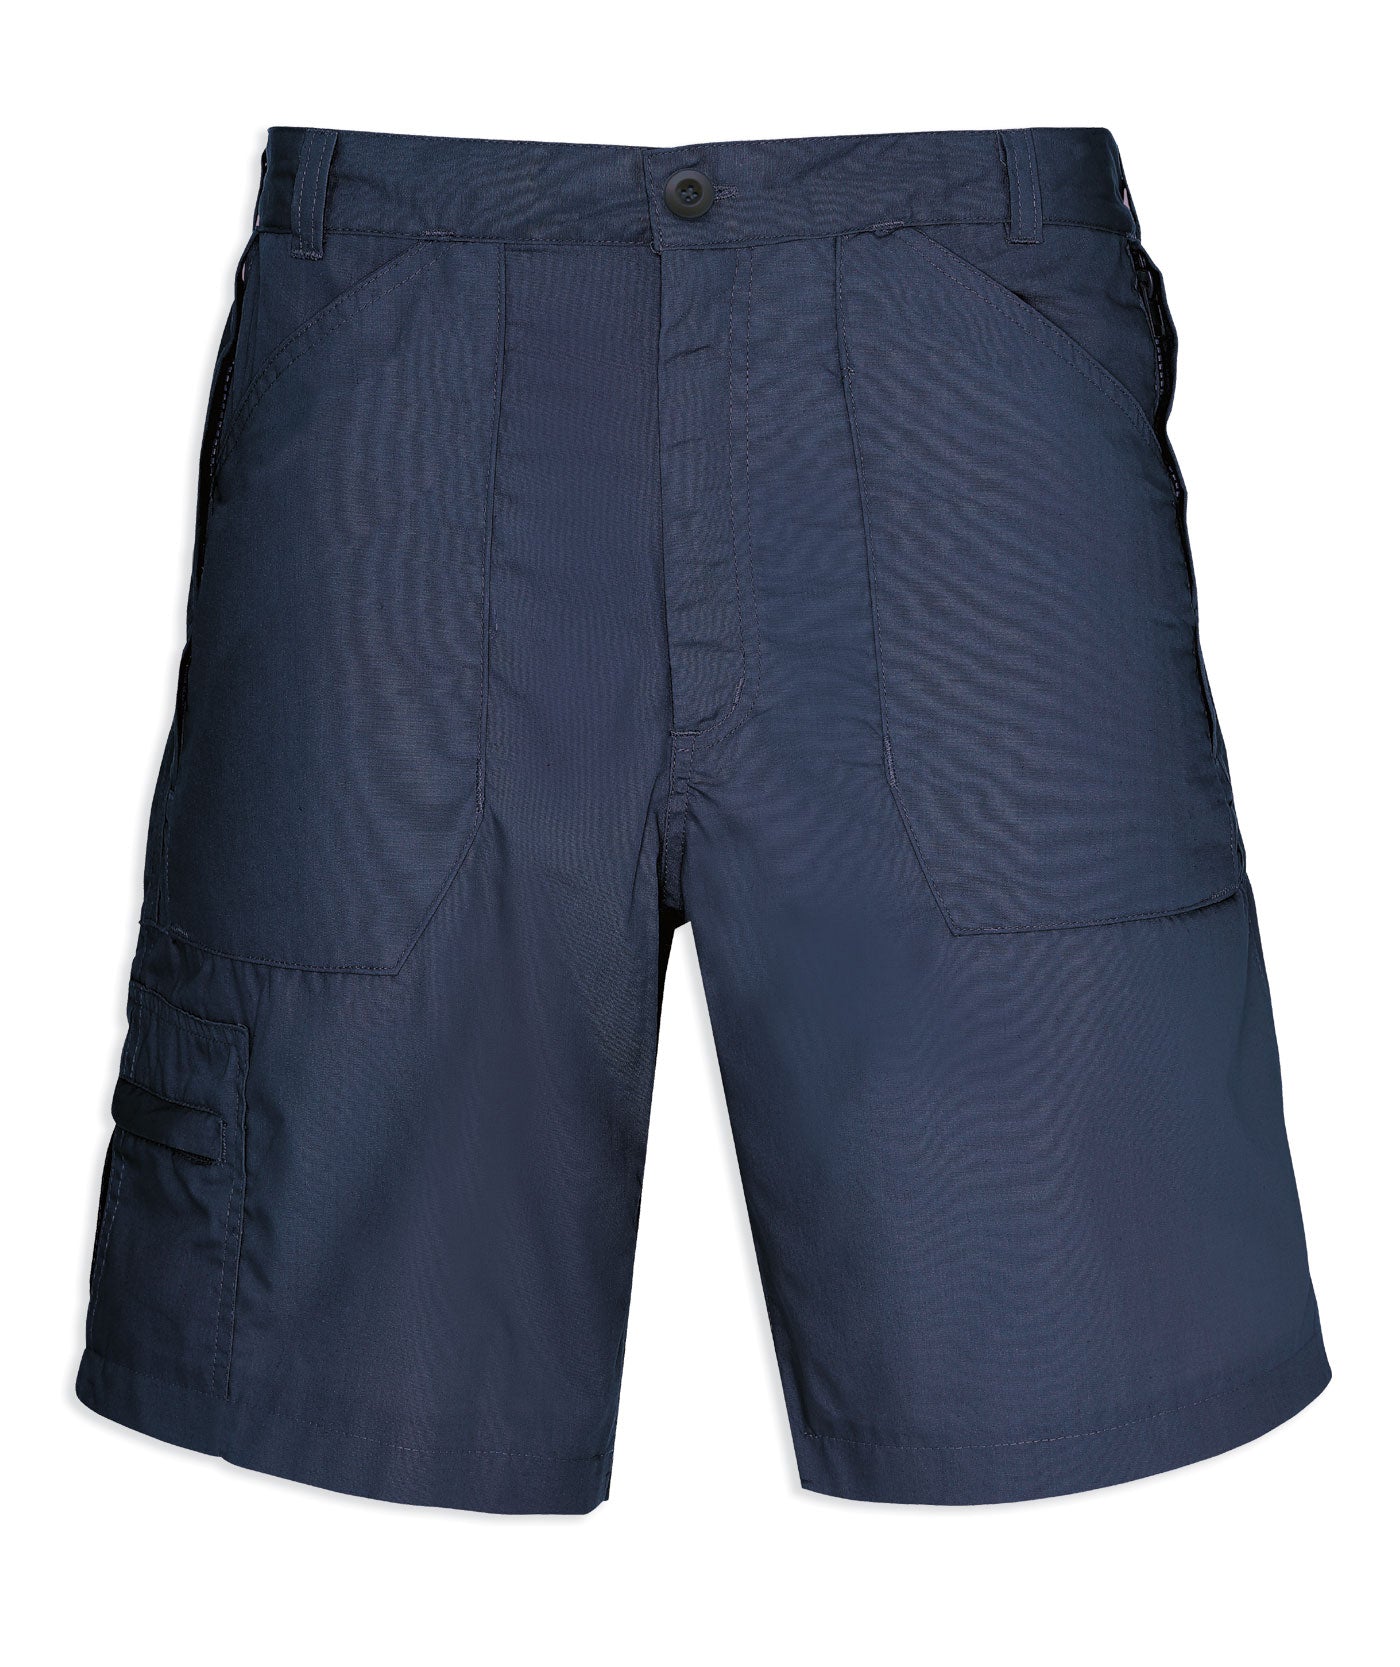 Champion multi pocket navy hiking shorts 